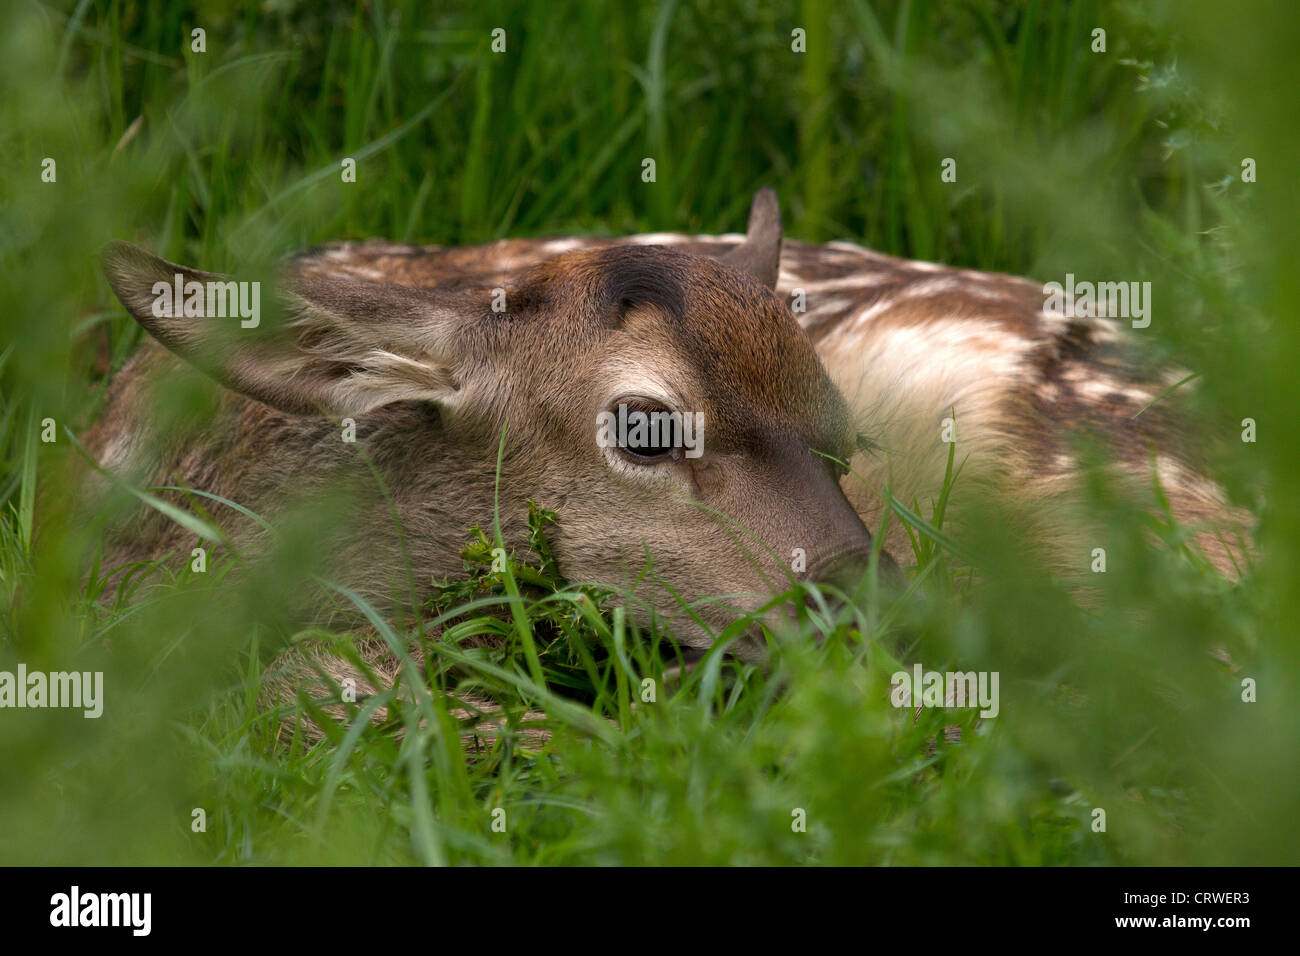 Young Red Deer, Cervus elaphus hiding in the grass Stock Photo